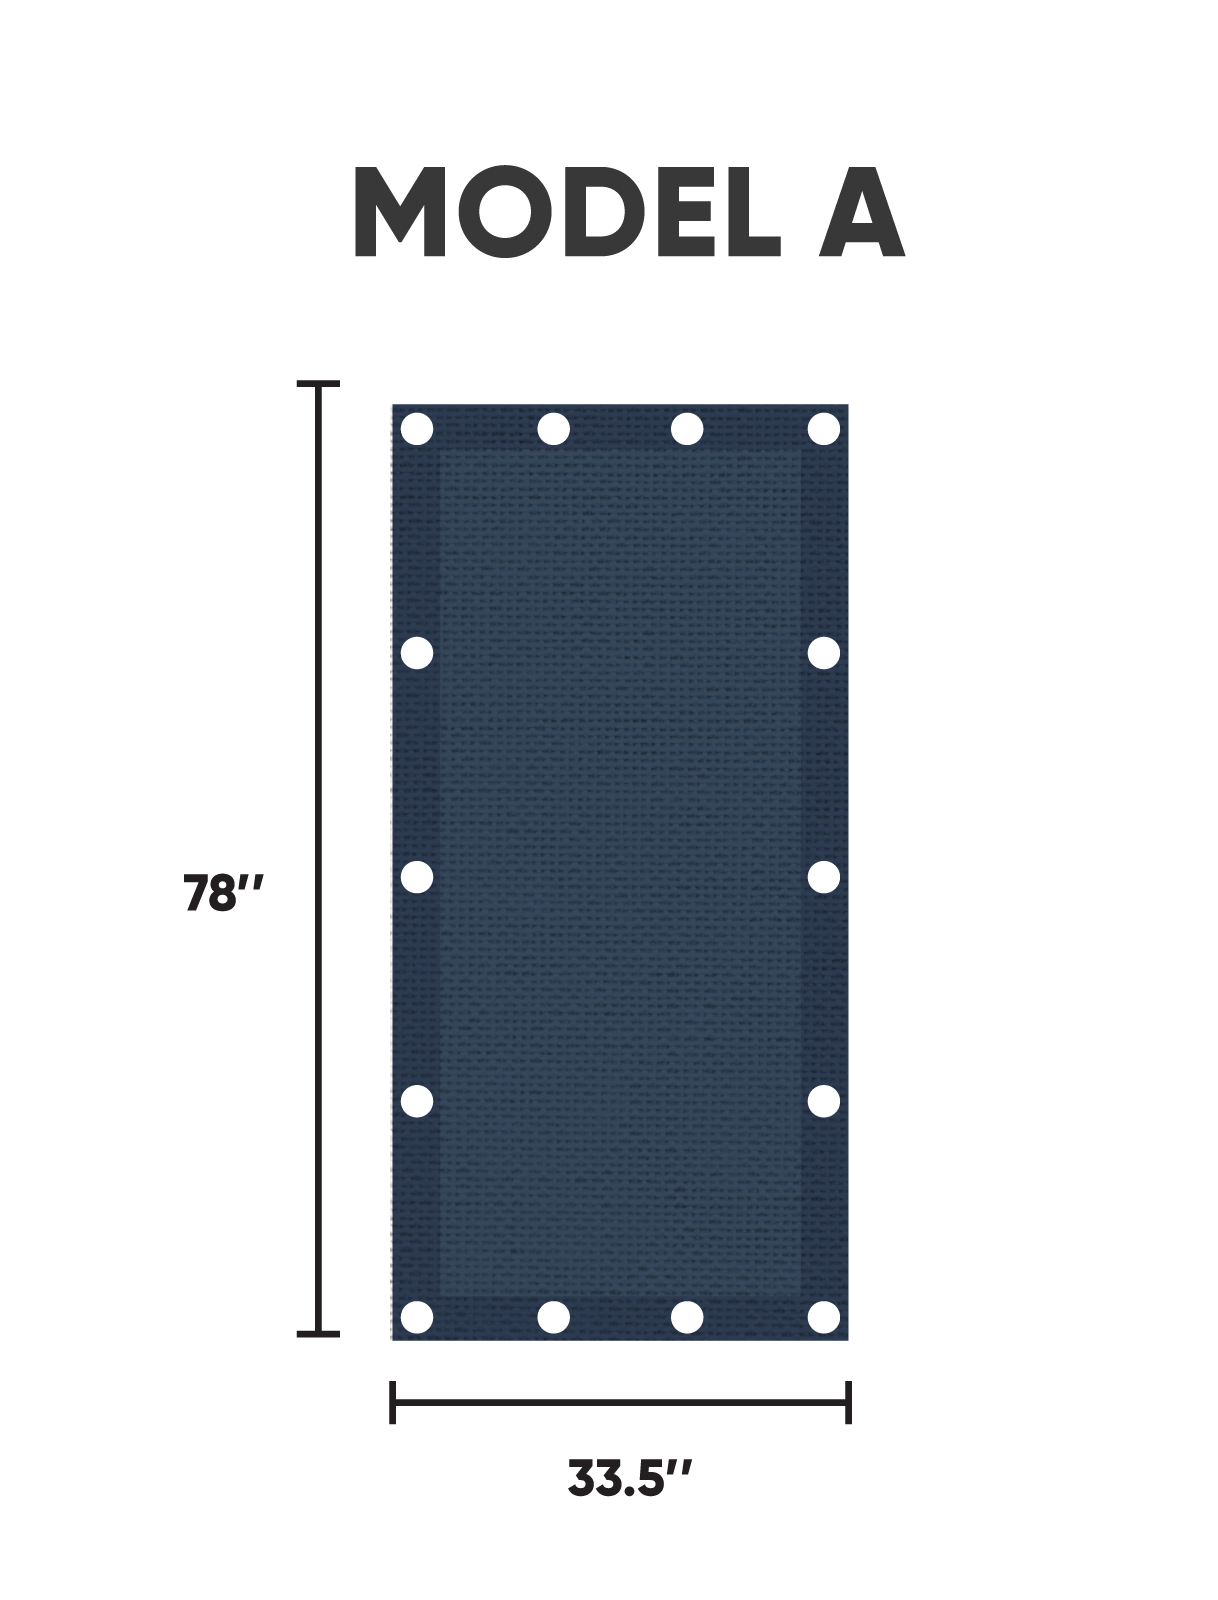 Tlaks磁気カーテン-断熱ブラックアウトカーテン-工具の取り付けなし-米国で設計および製造